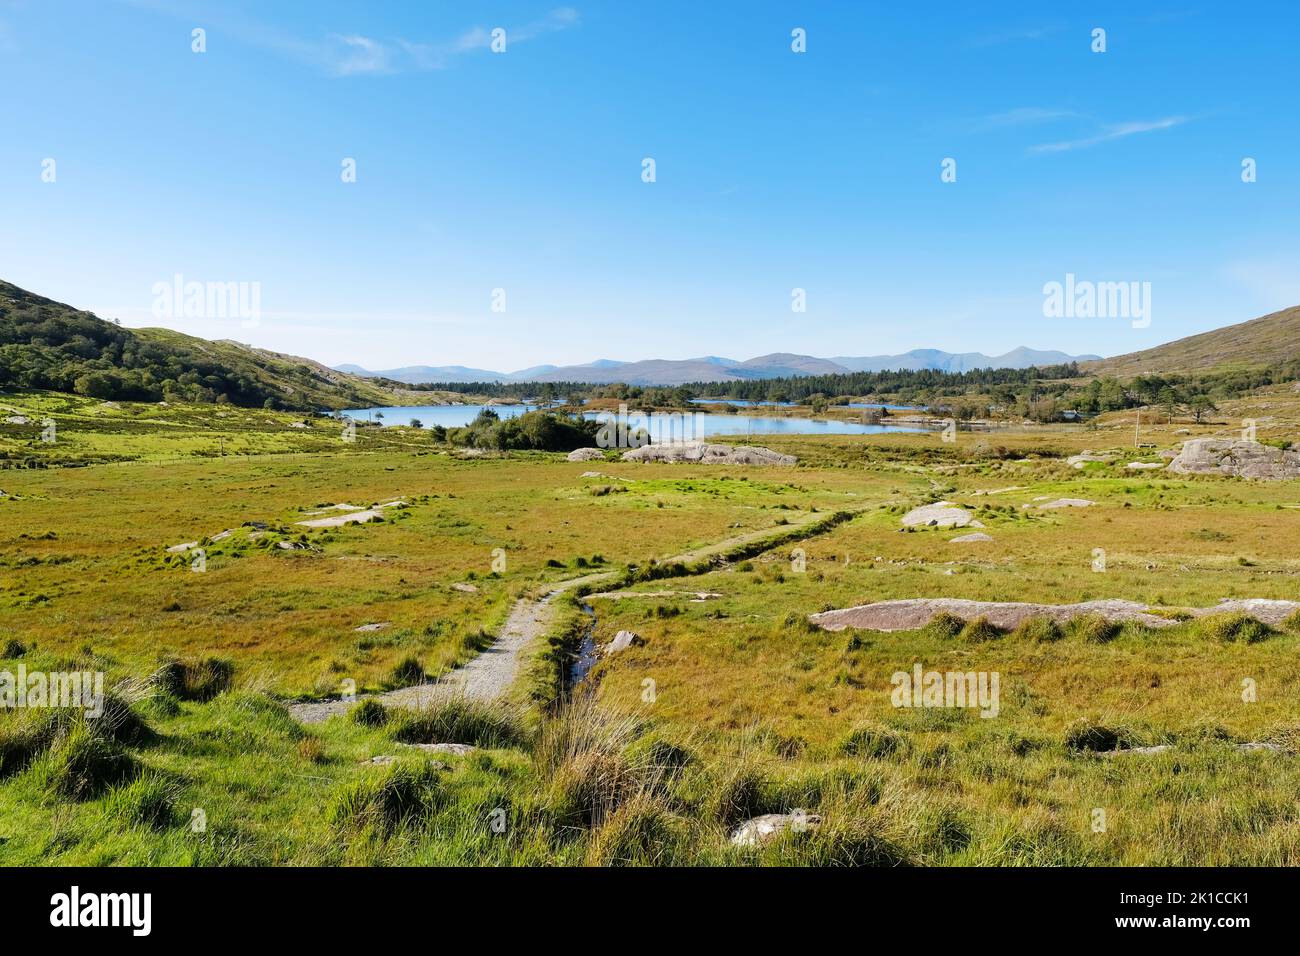 The landscape at Gleninchaquin Park, County Kerry, Ireland - John Gollop Stock Photo